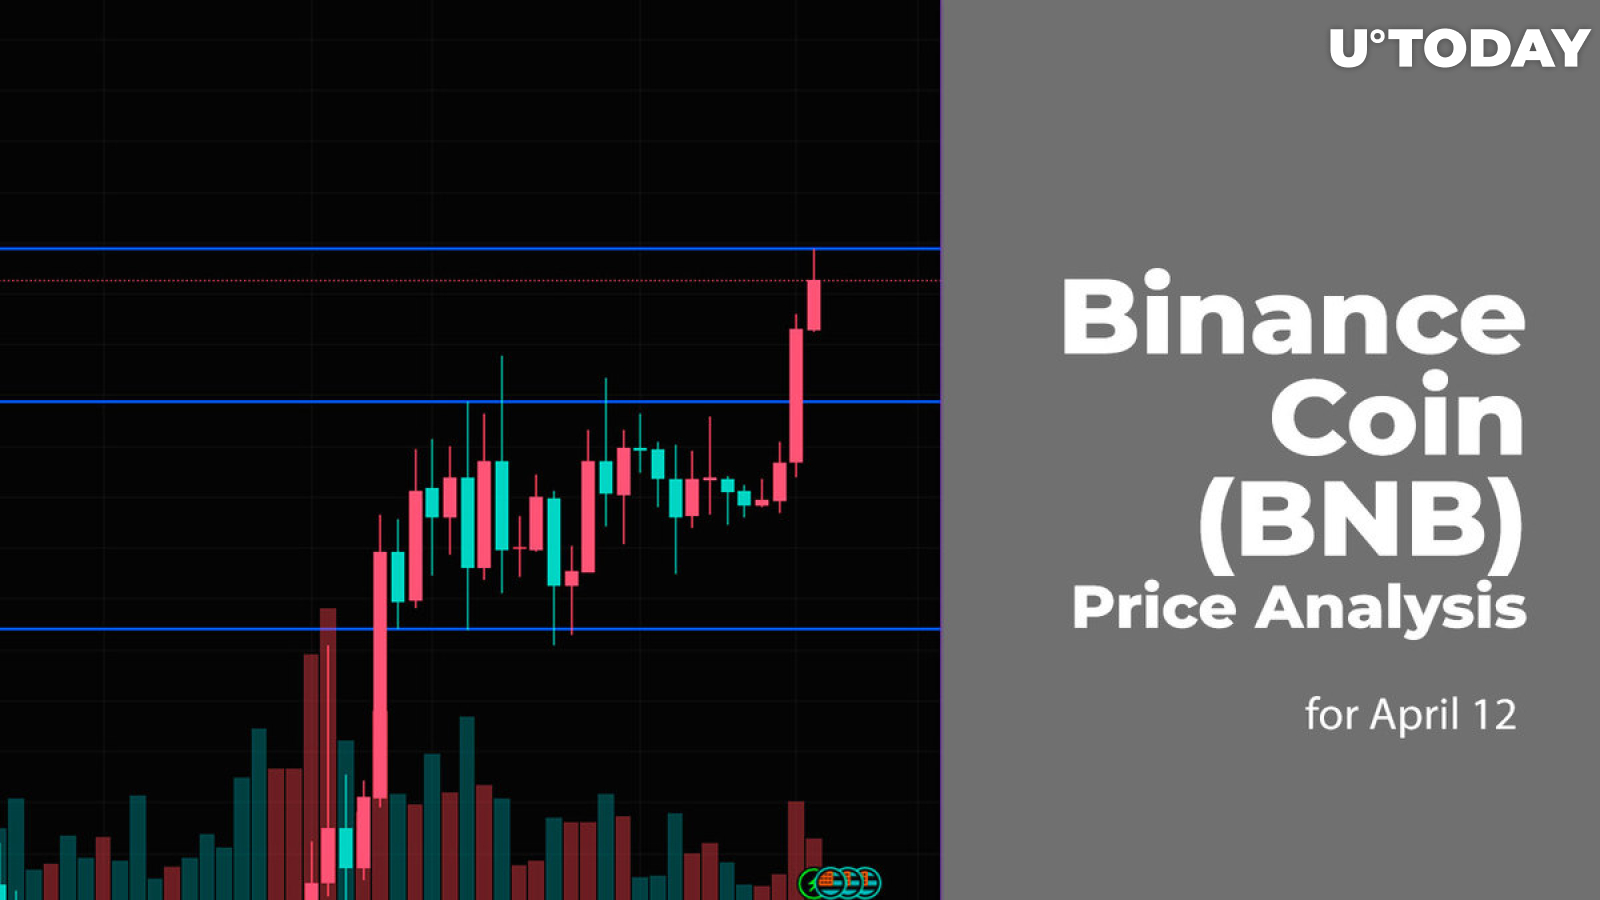 Binance Coin (BNB) Price Analysis for April 12